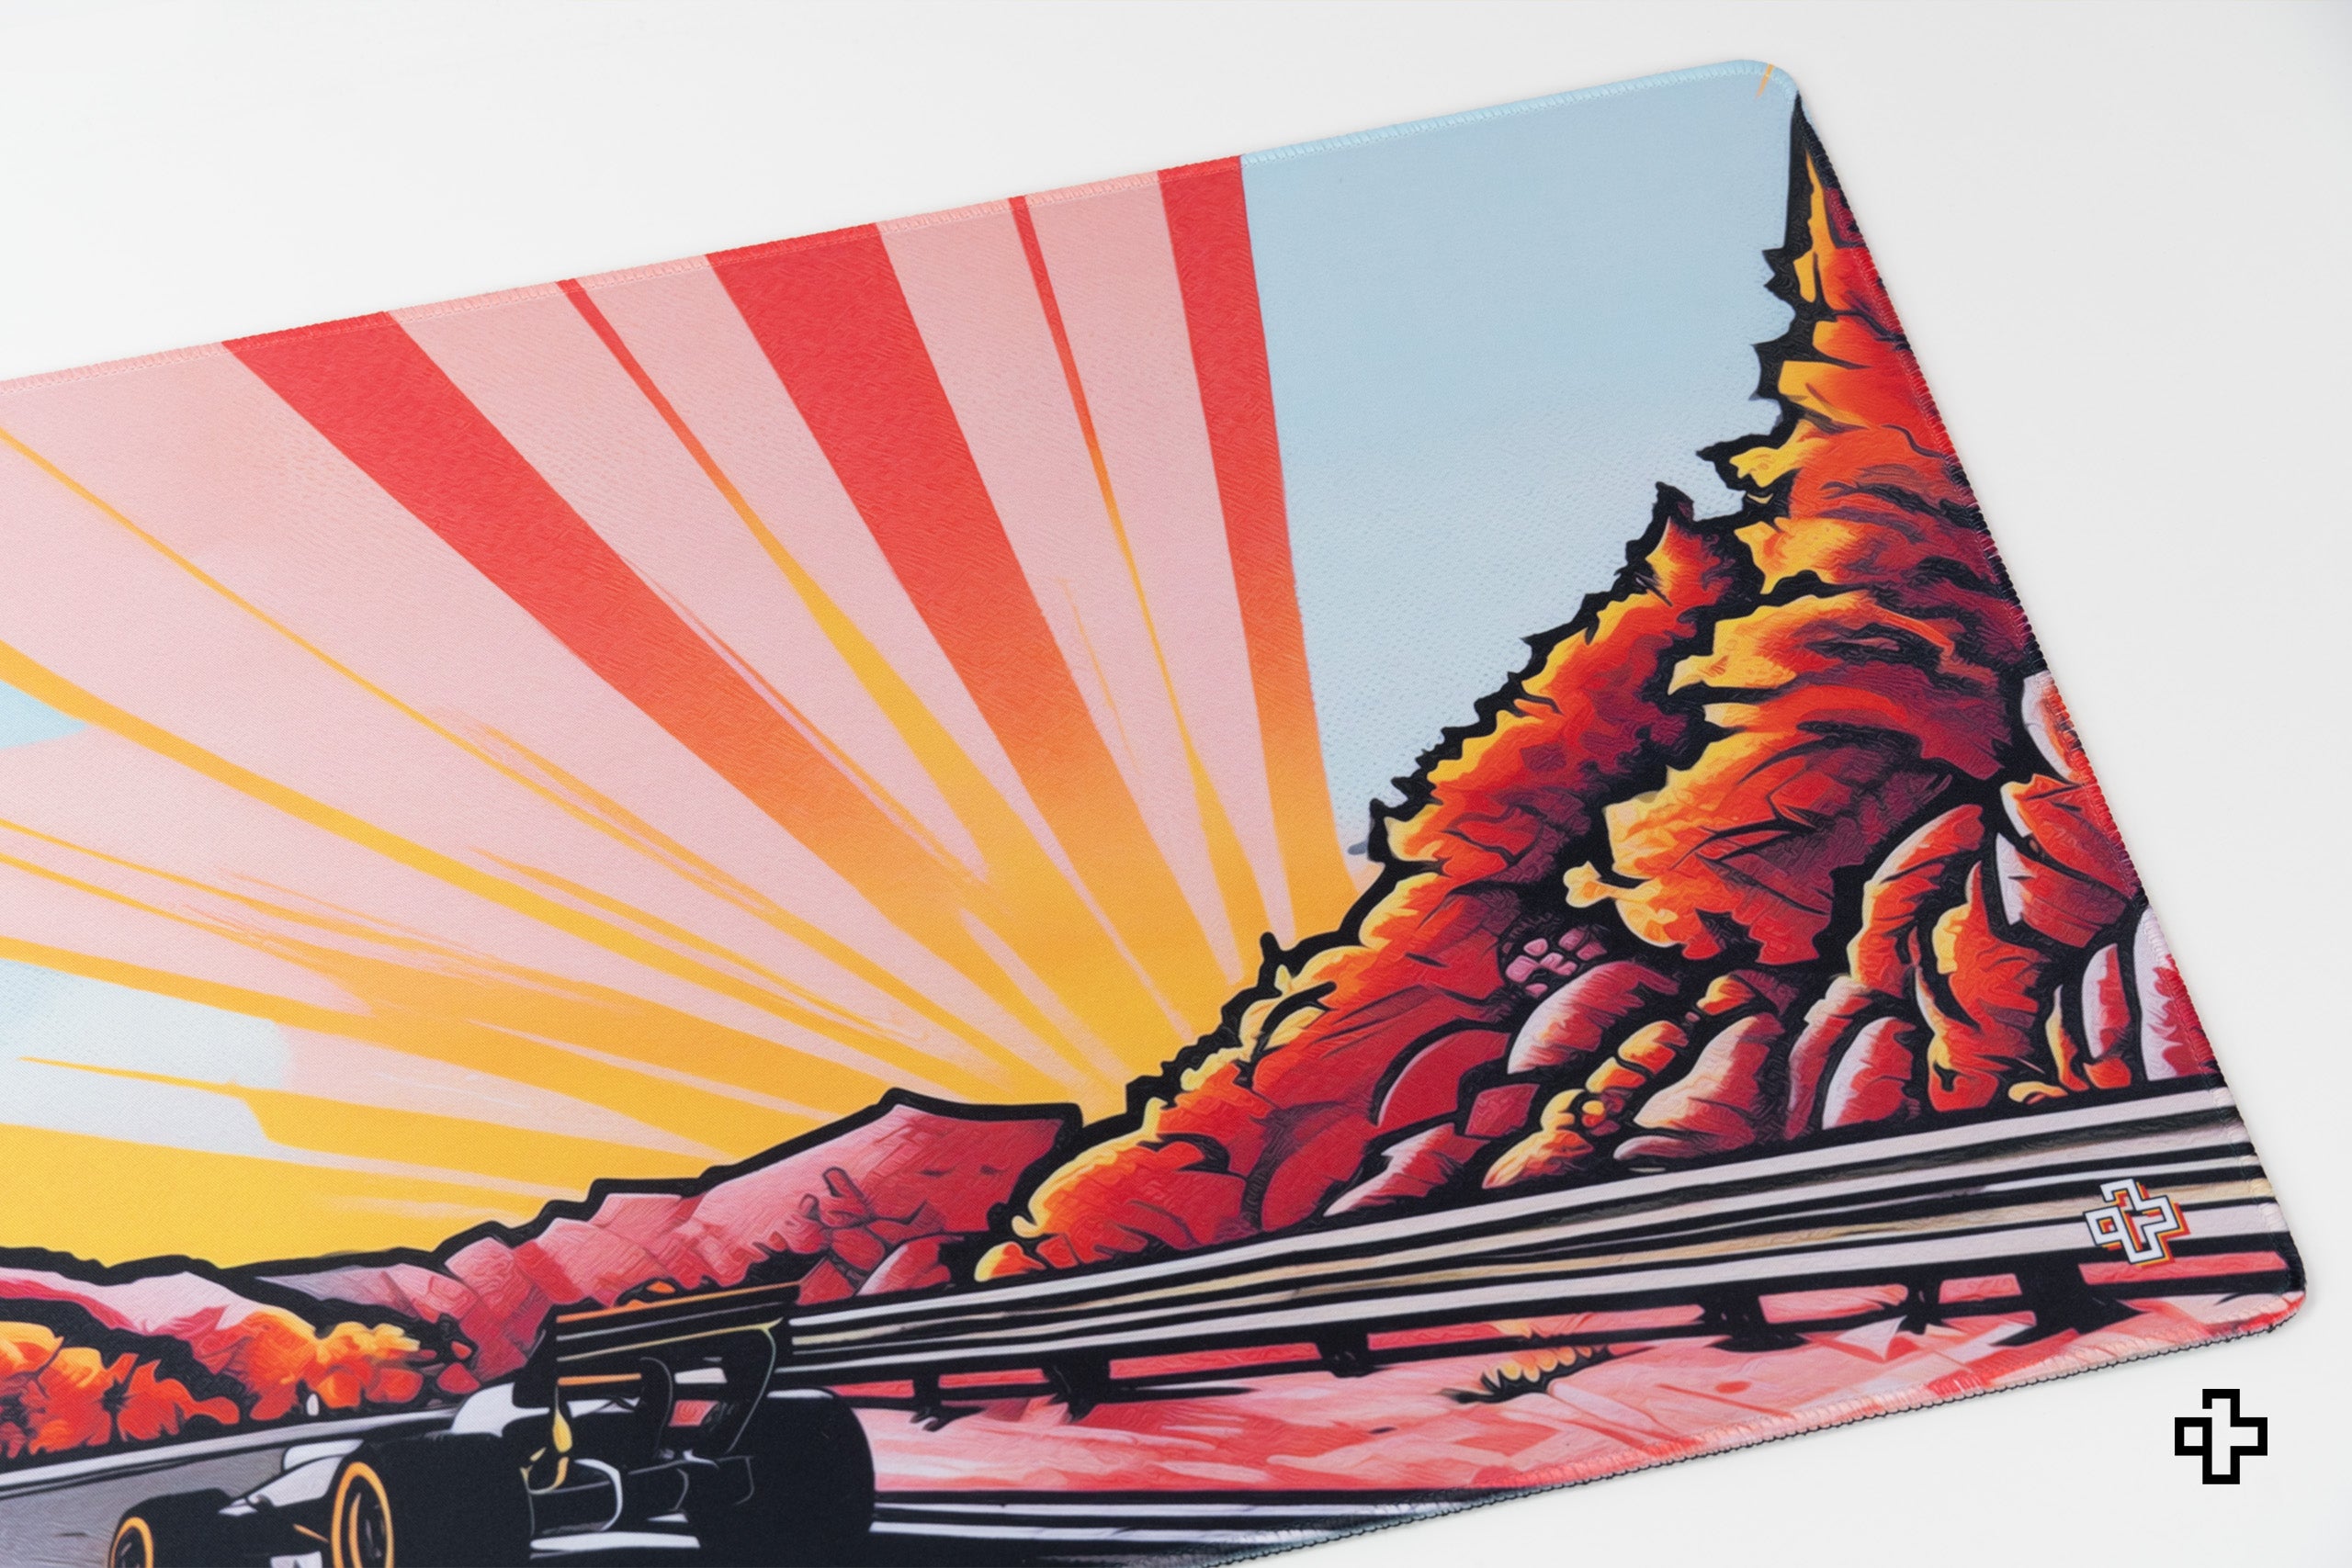 Bureaumat muismat QwertyKey Formula Sunset 4 mm marge